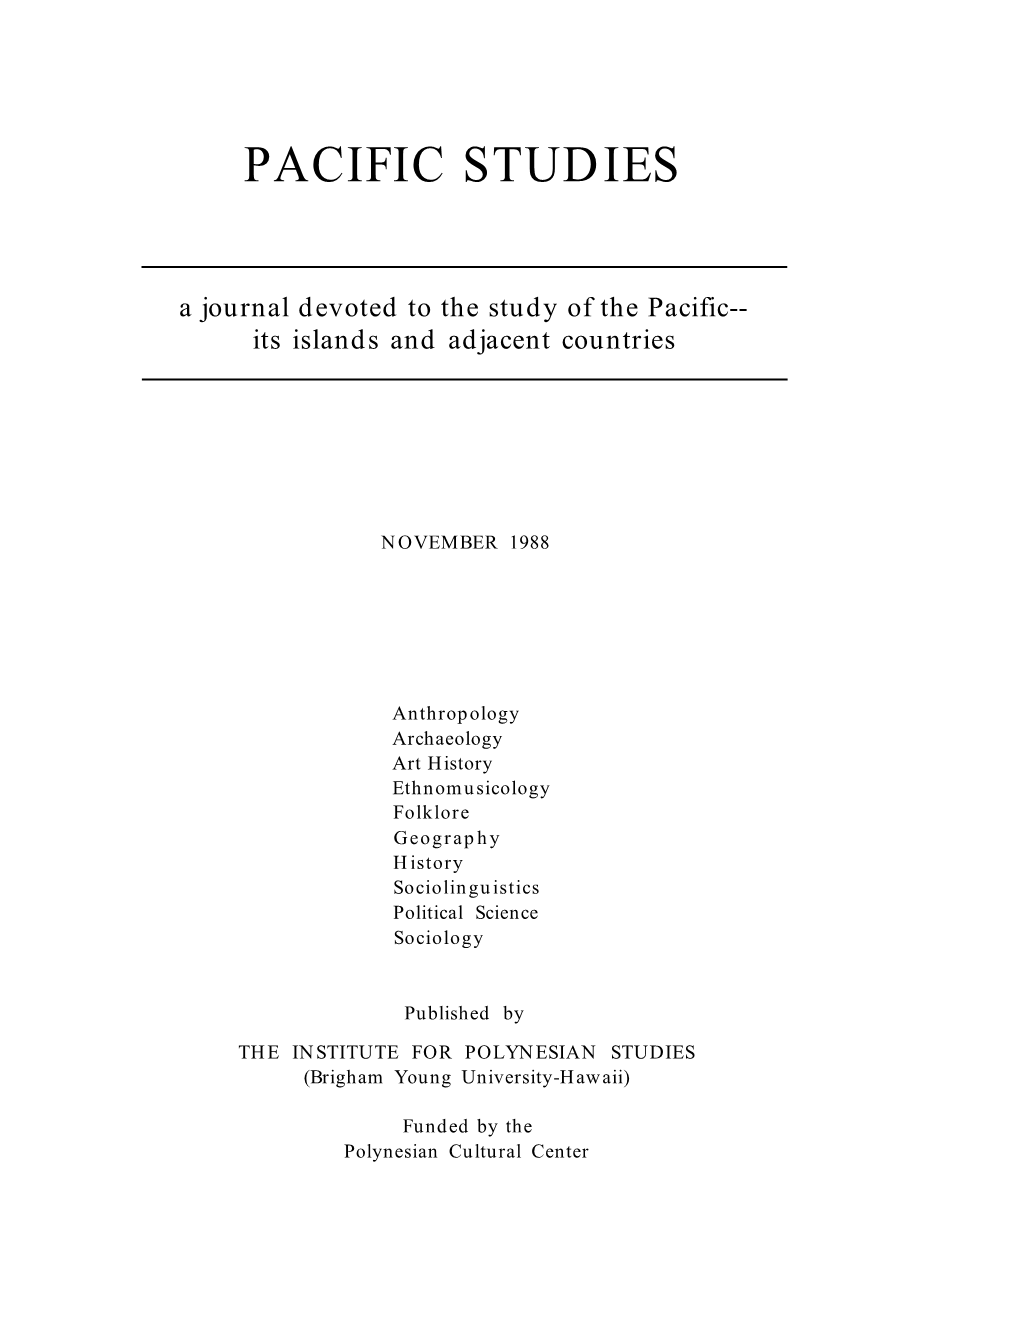 Vol. 12 No. 1 Pacific Studies